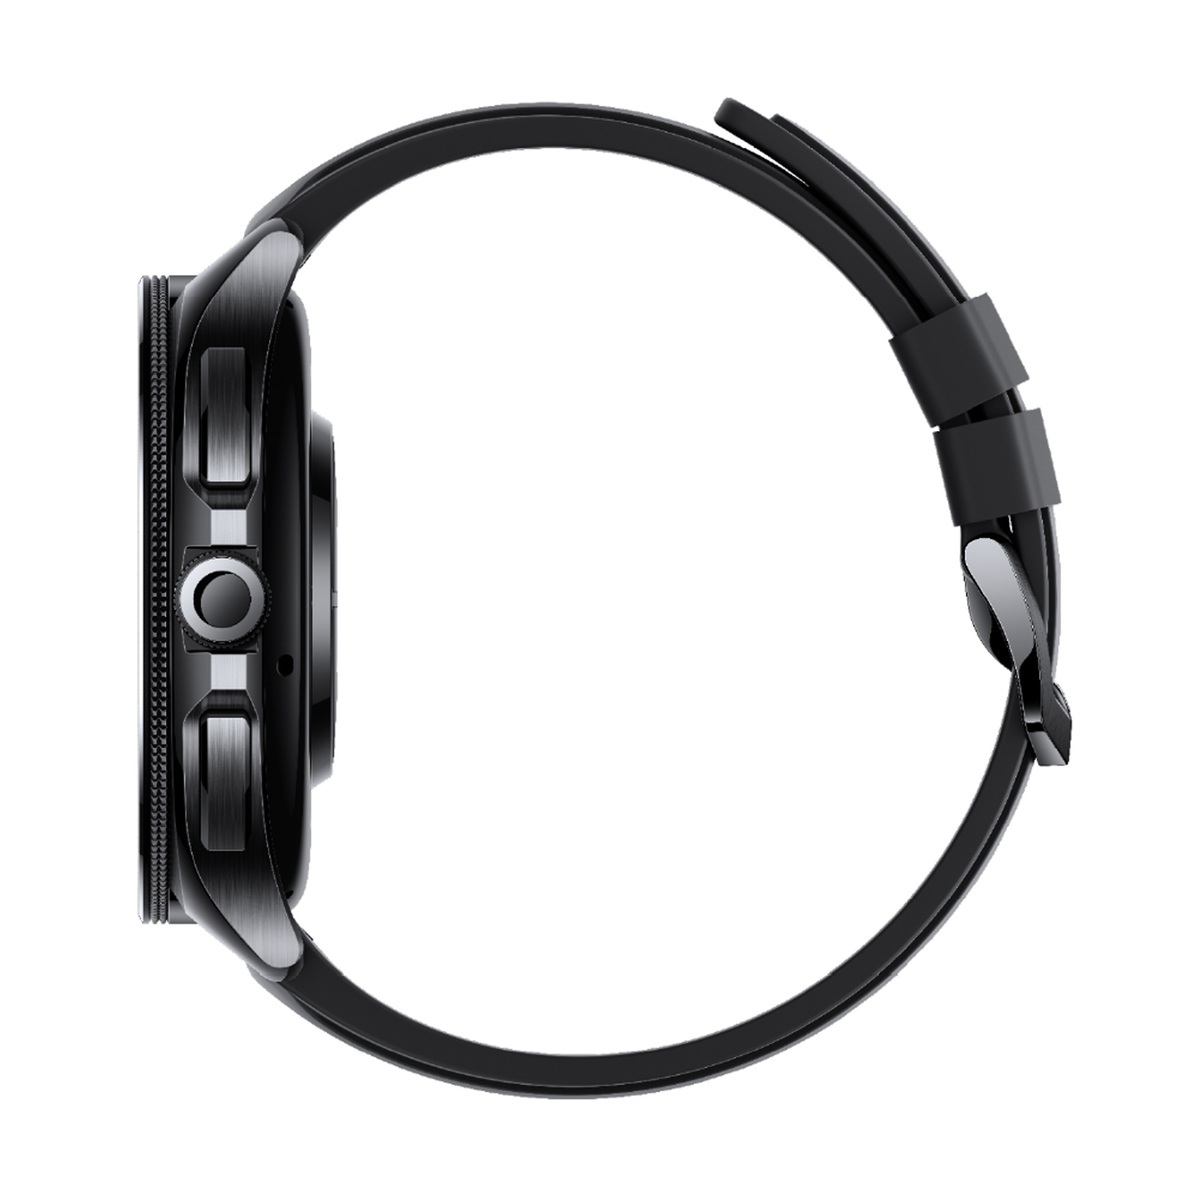 Xiaomi Watch 2 Pro Smart Watch, 46 mm, 1.43″ AMOLED Display, Black with Black Fluororubber Strap, BHR7211GL